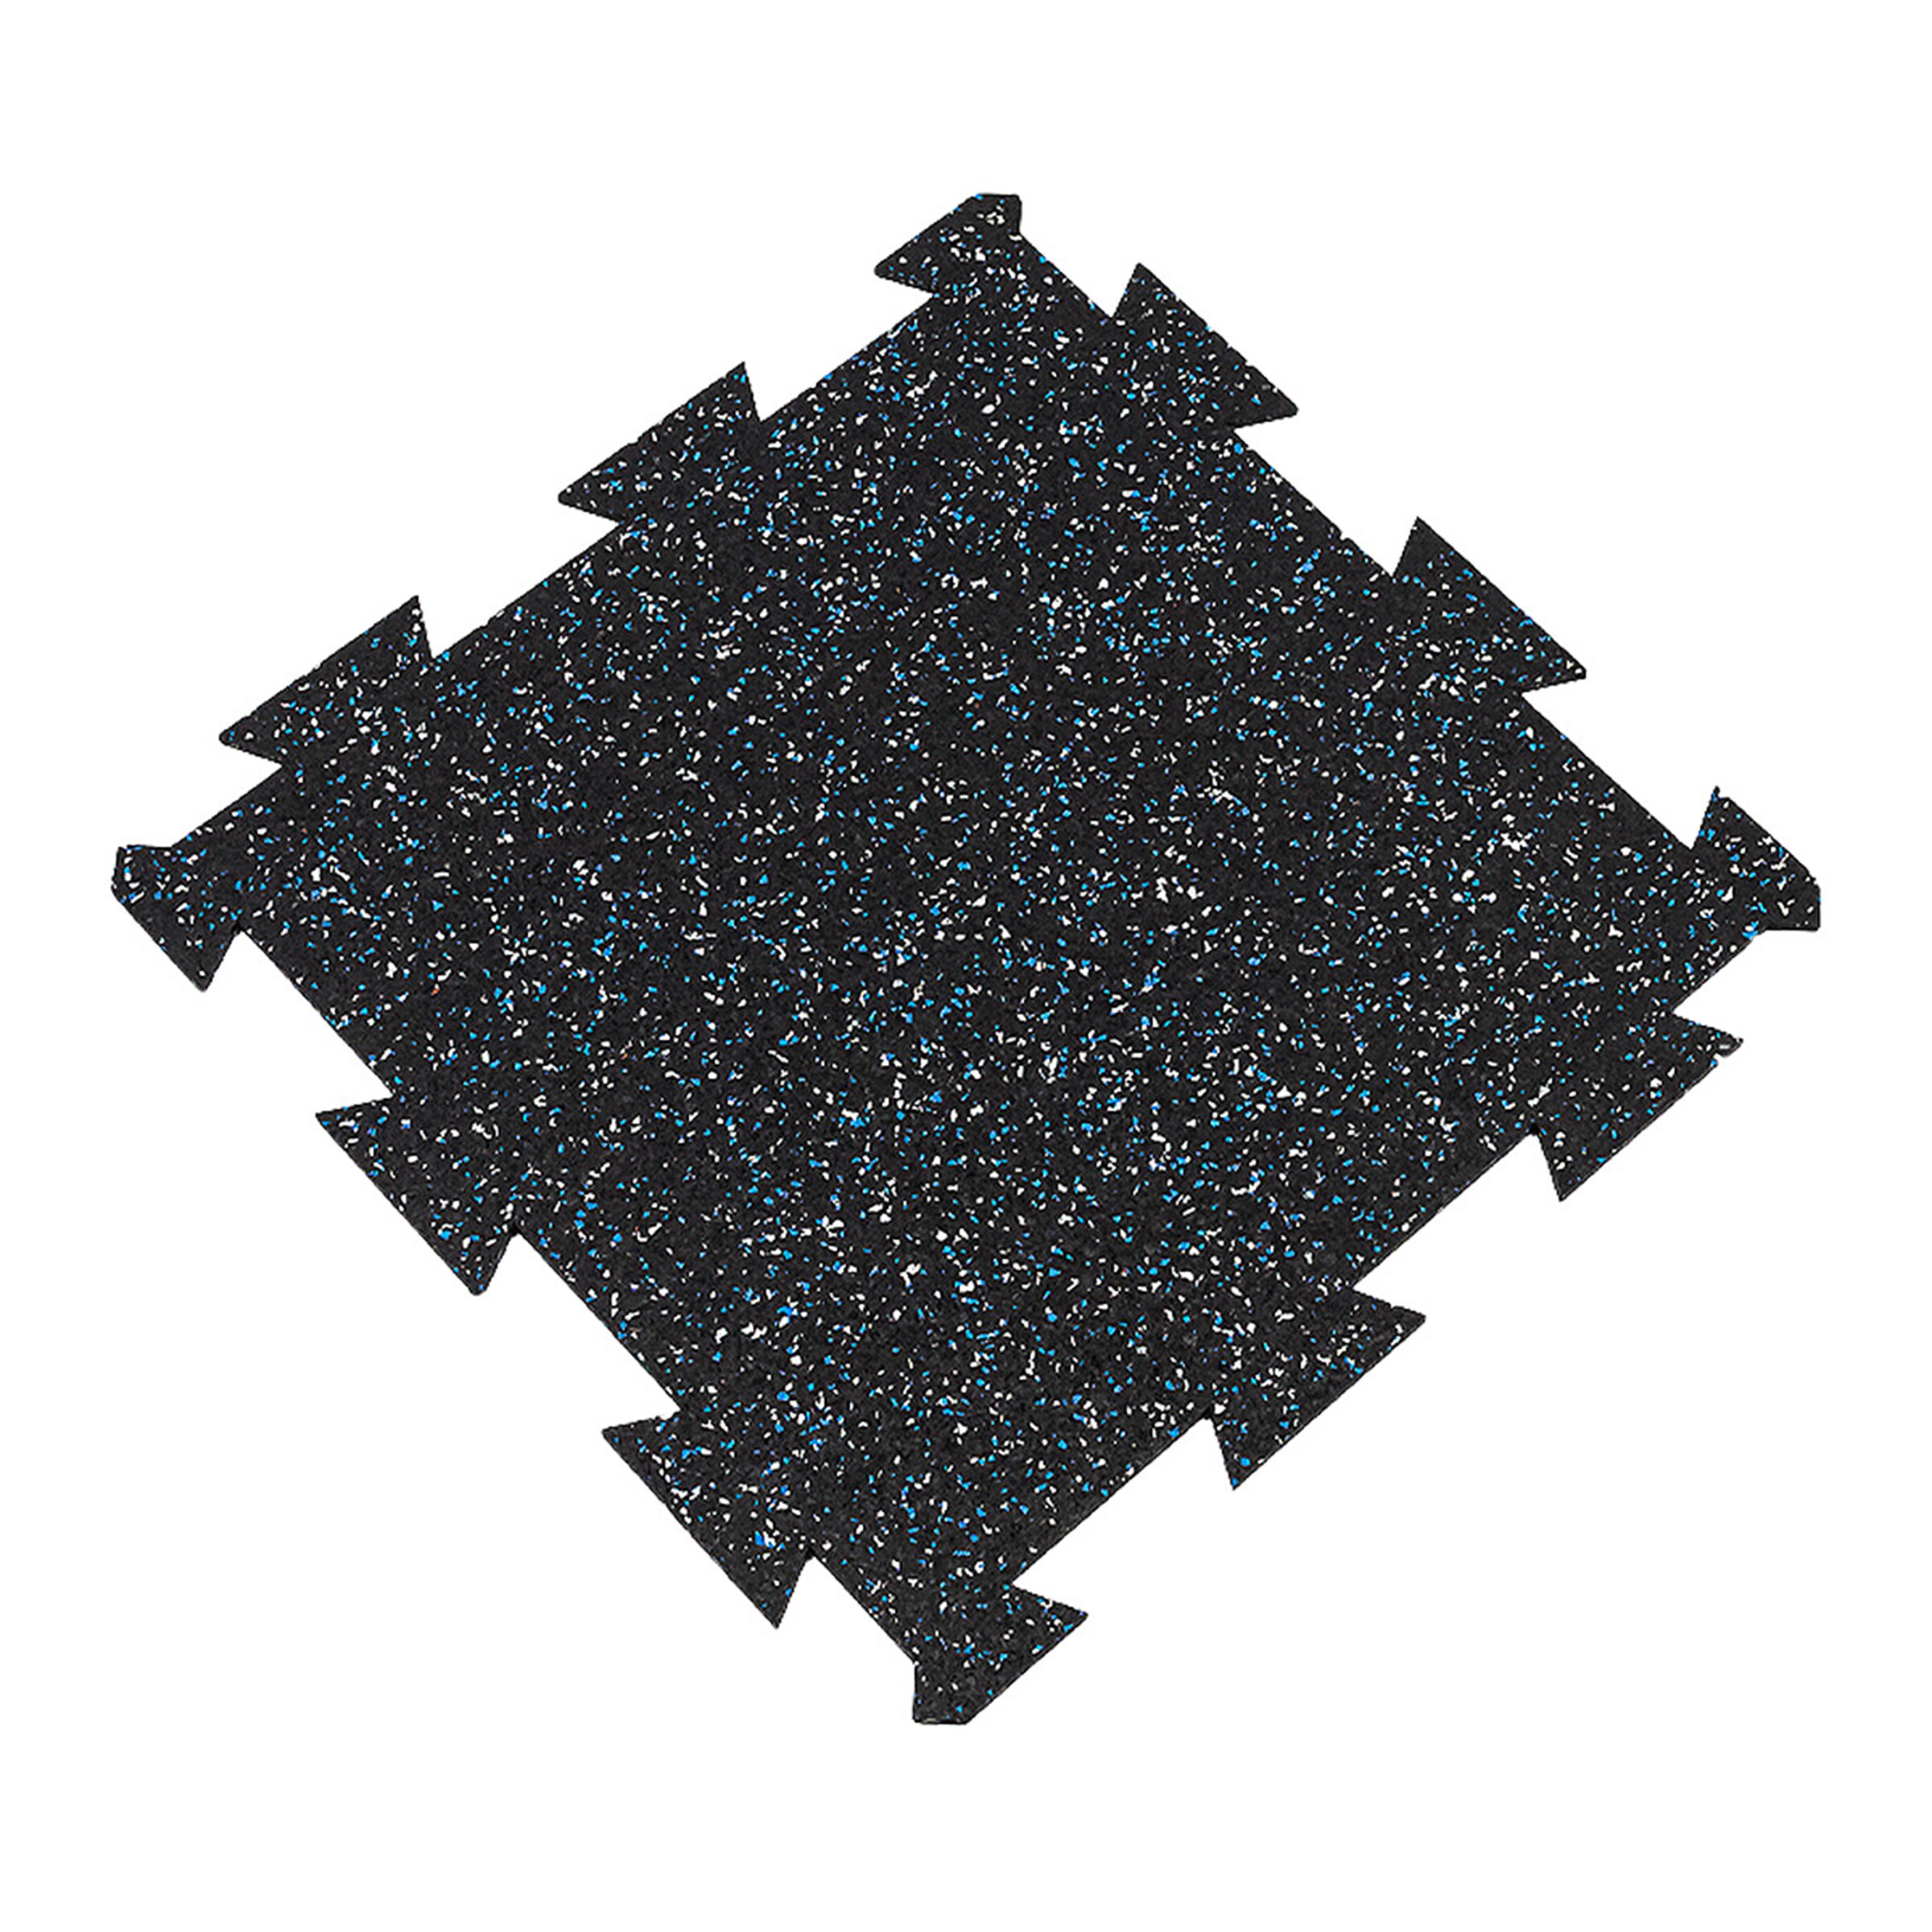 Černo-bílo-modrá gumová modulová puzzle dlaždice (střed) FLOMA FitFlo SF1050 - délka 50 cm, šířka 50 cm, výška 1 cm